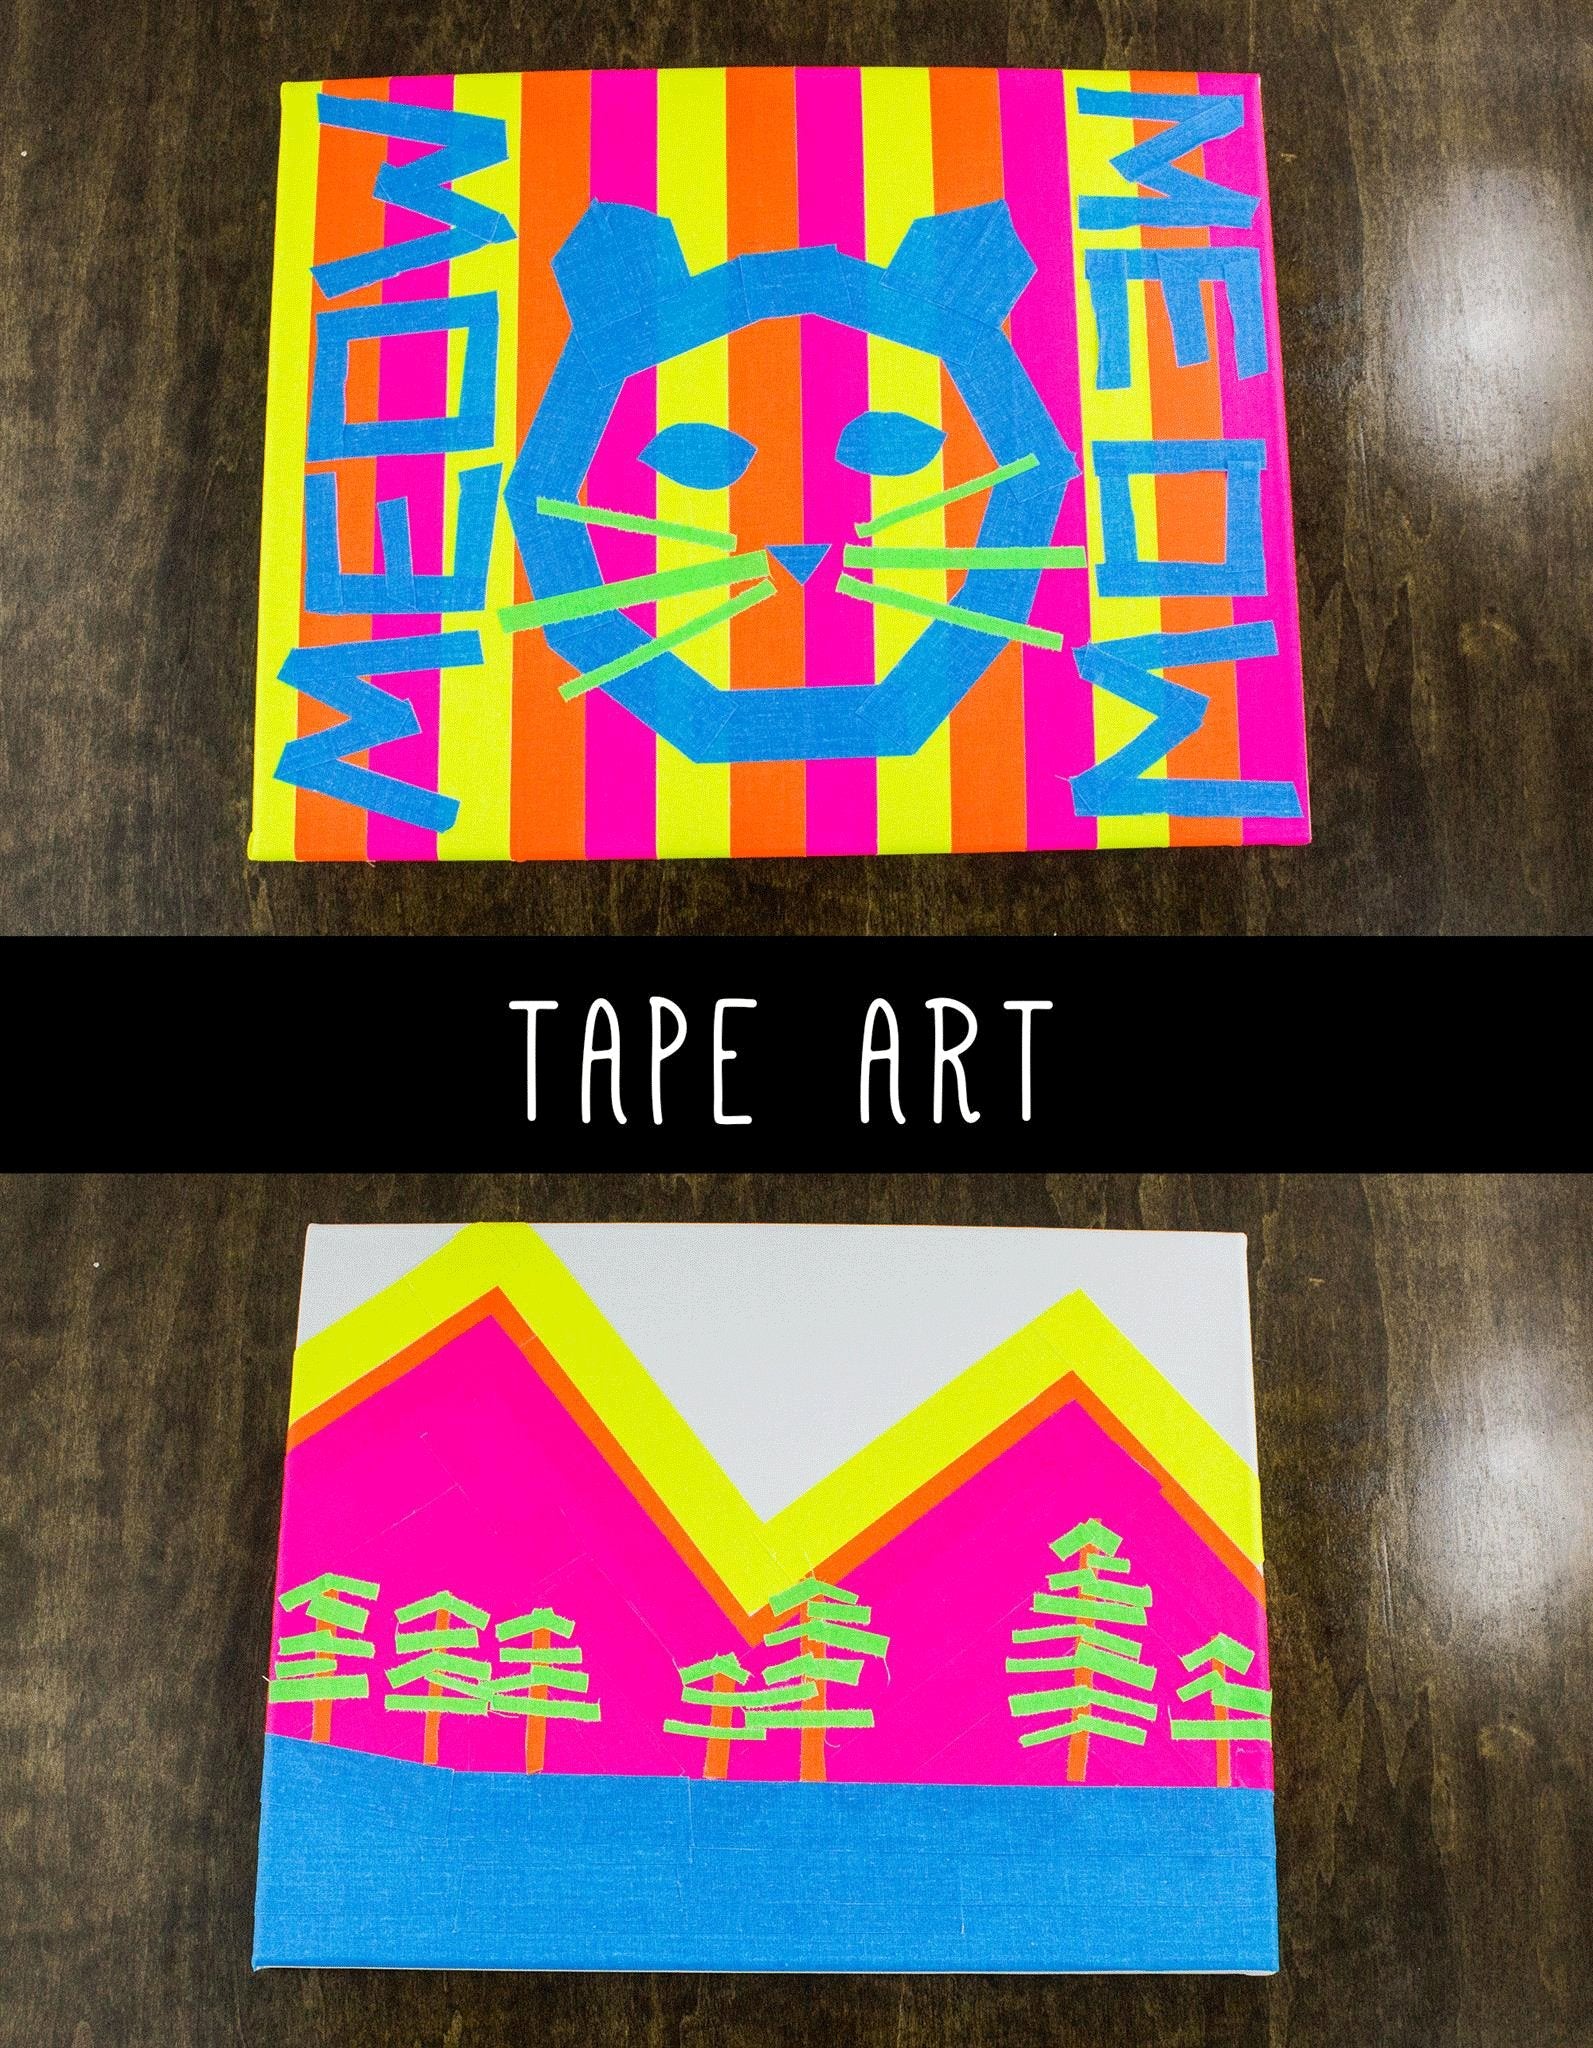 1/2 - Fluorescent Gaff Tape Roll (Spike Tape) – Camera Ambassador